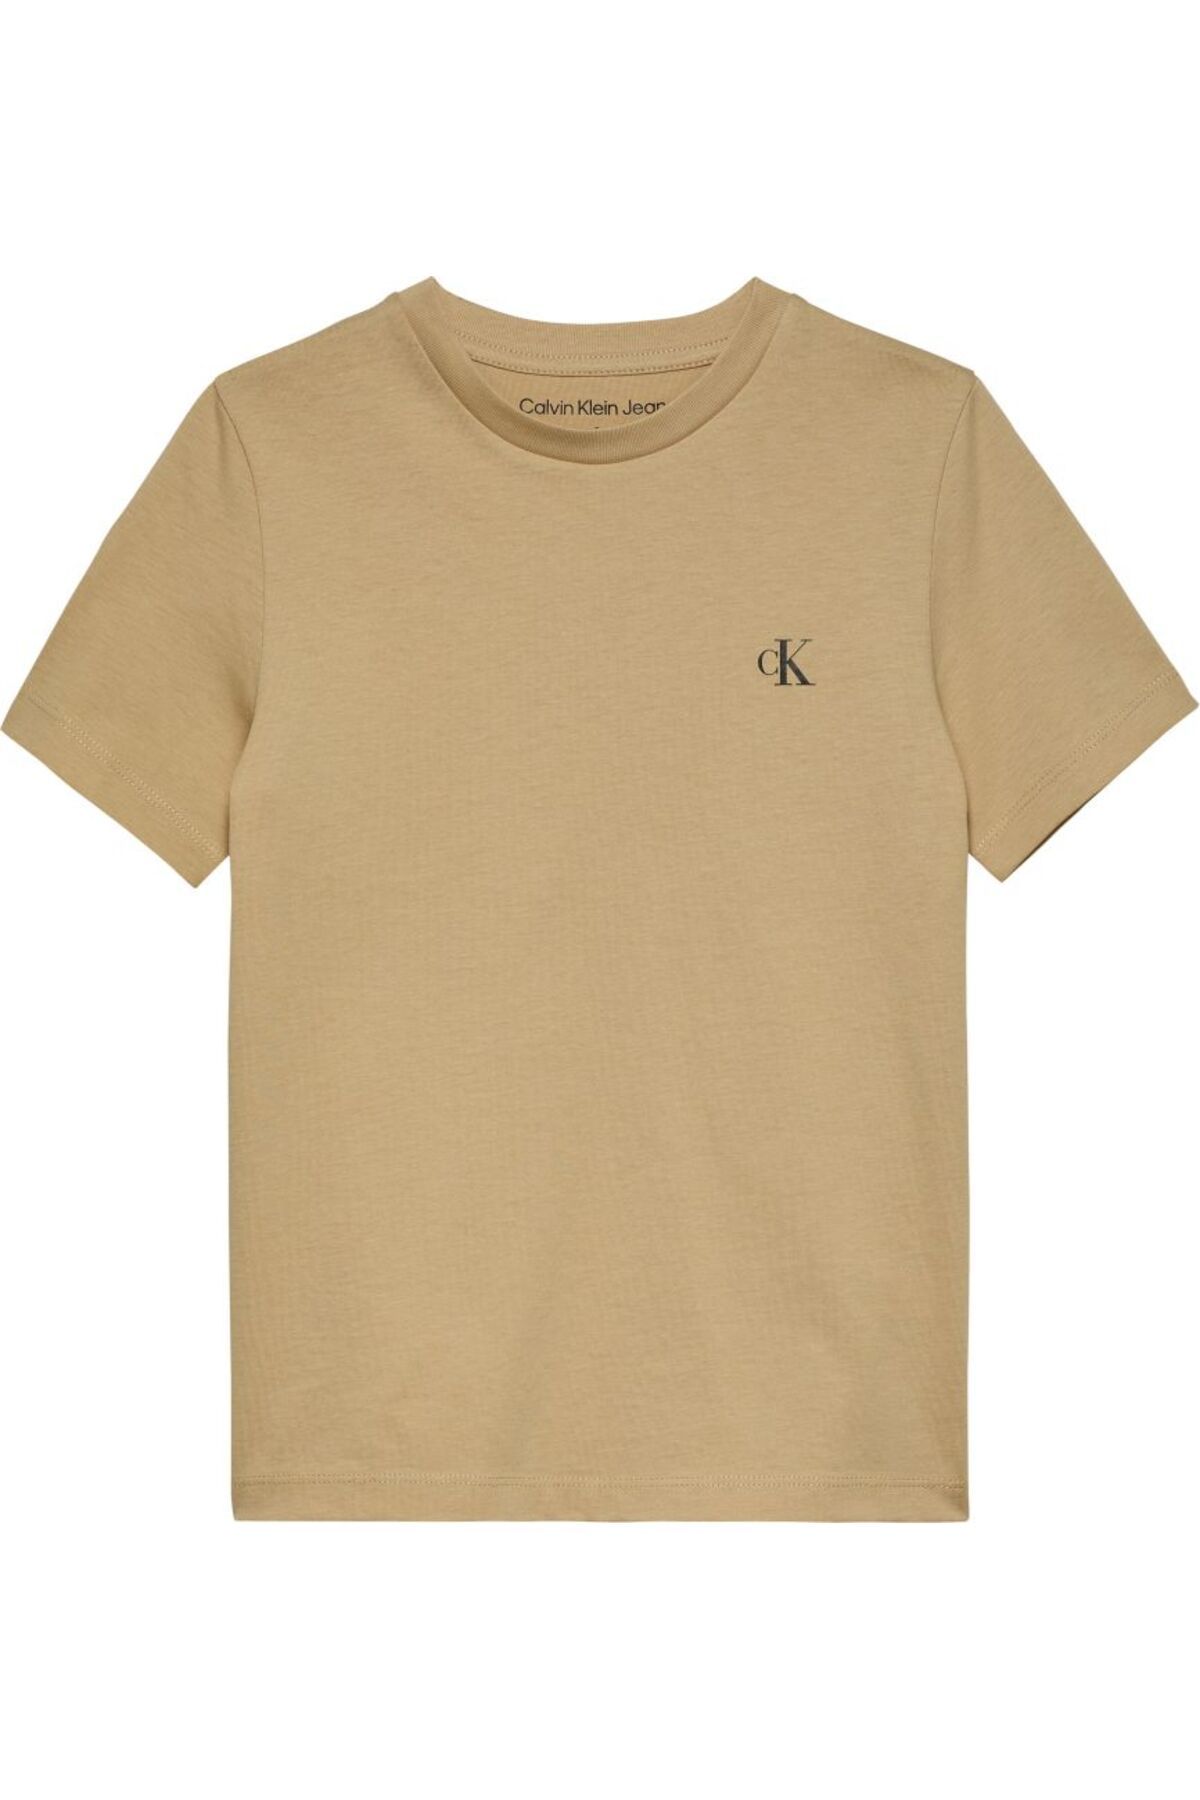 Calvin Klein Calvin Klein پیراهن تی شرت مردانه بافت کلوین کلین